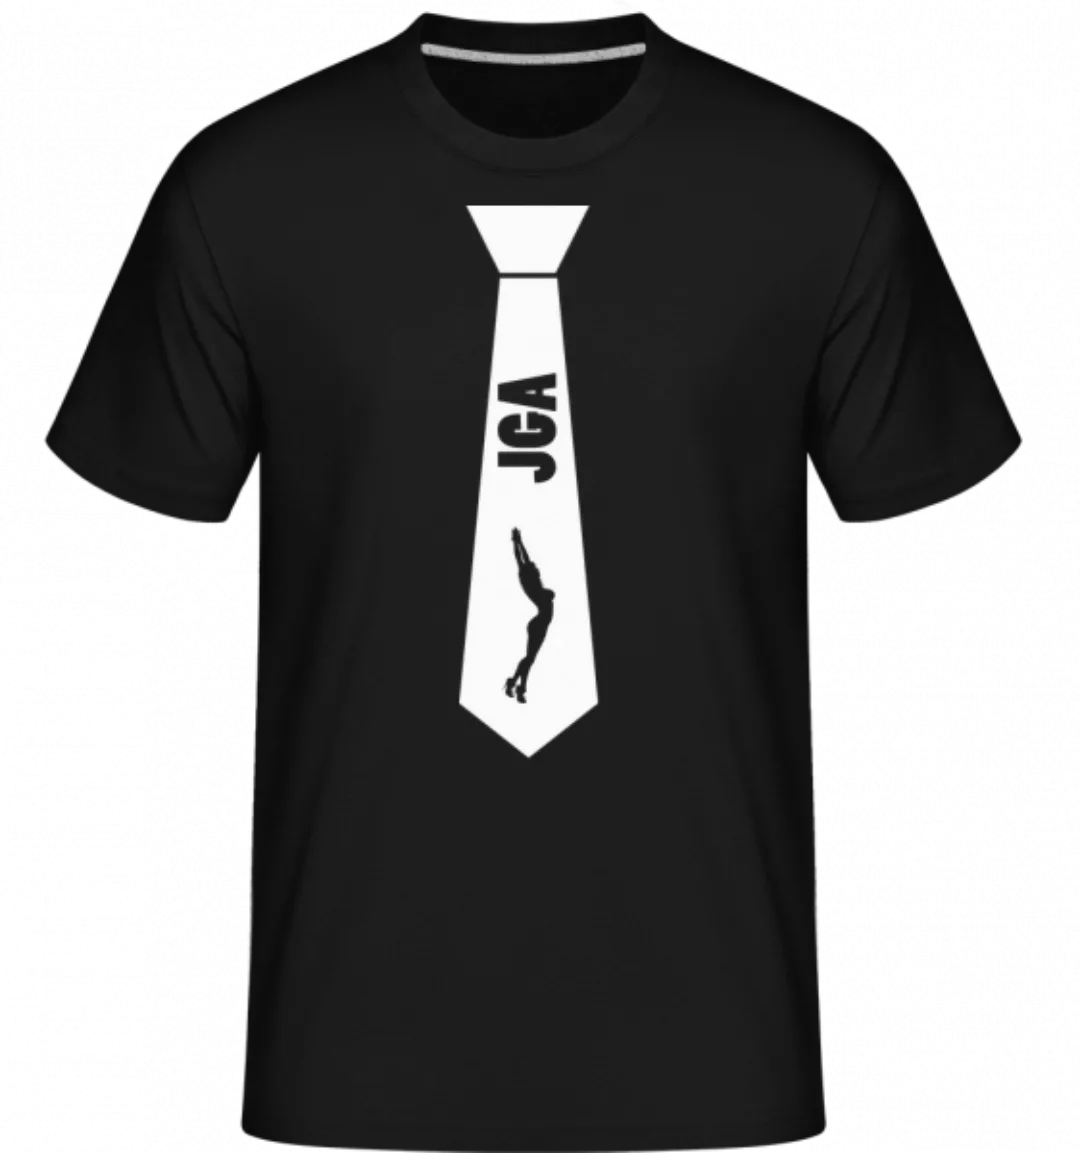 Krawatte JGA Stripperin · Shirtinator Männer T-Shirt günstig online kaufen